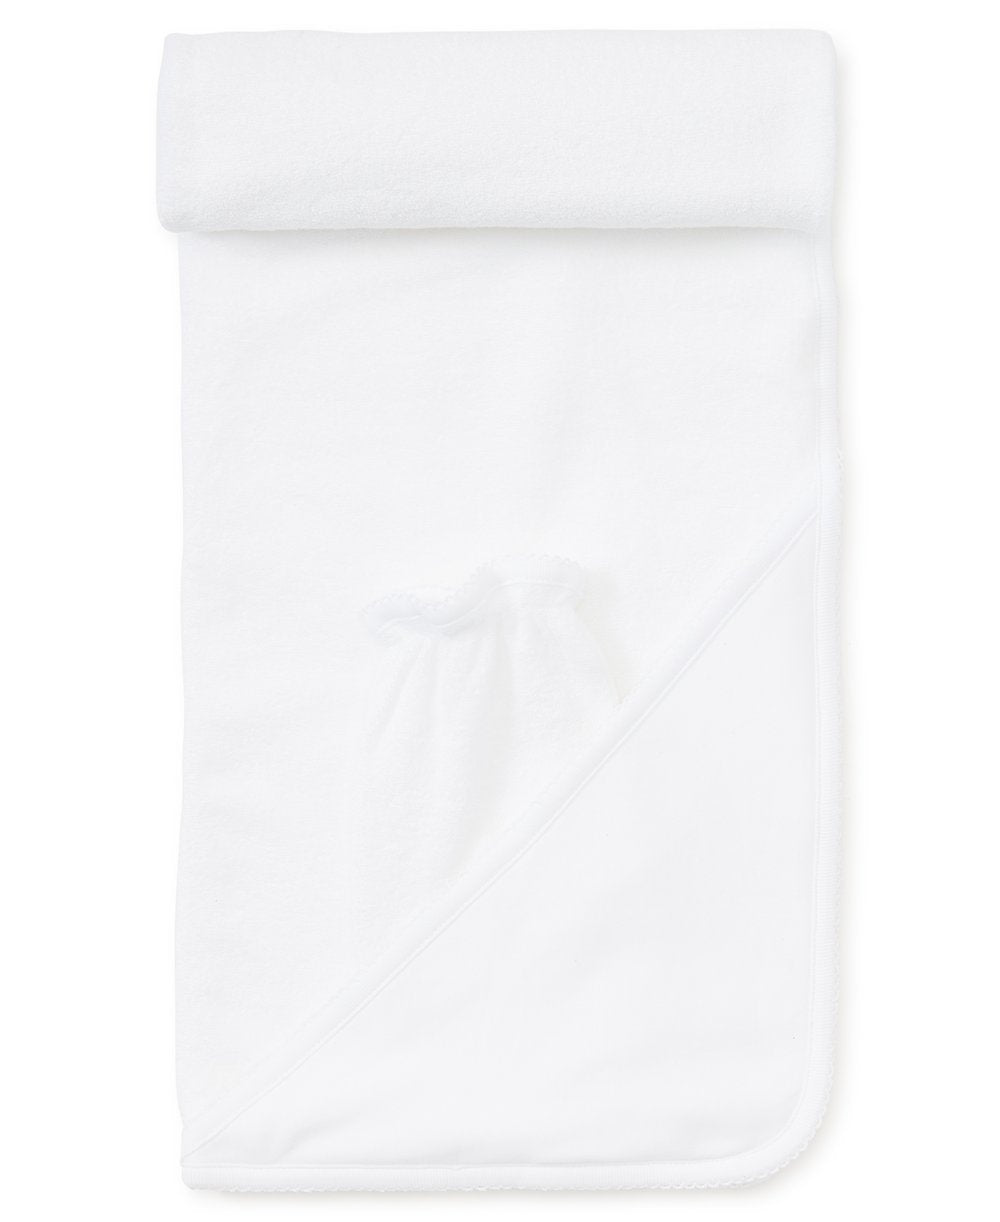 Towel with Mitt, White